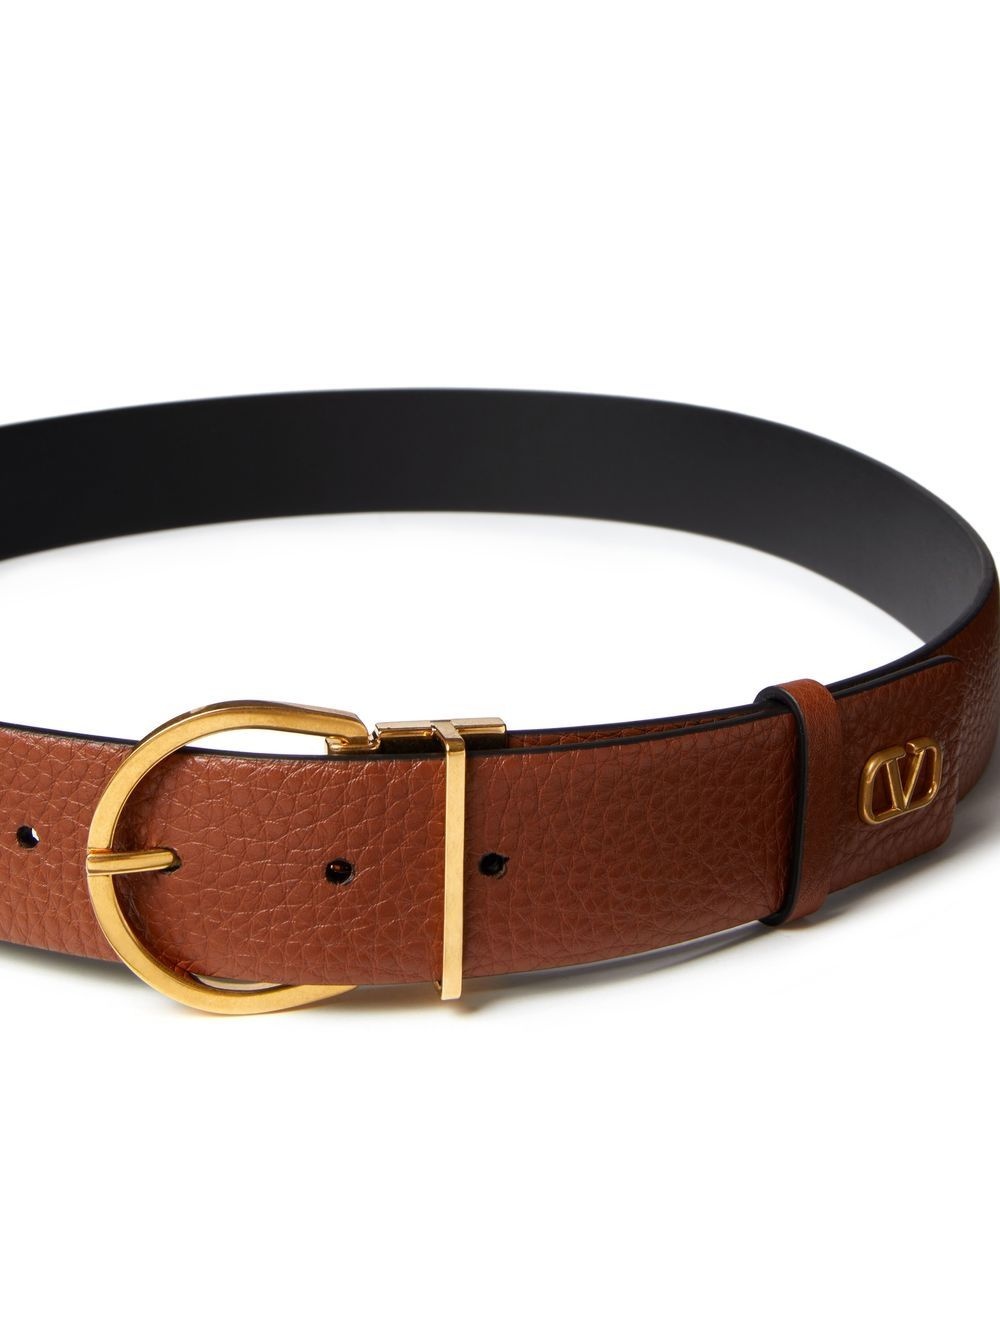 VLogo leather belt - 4